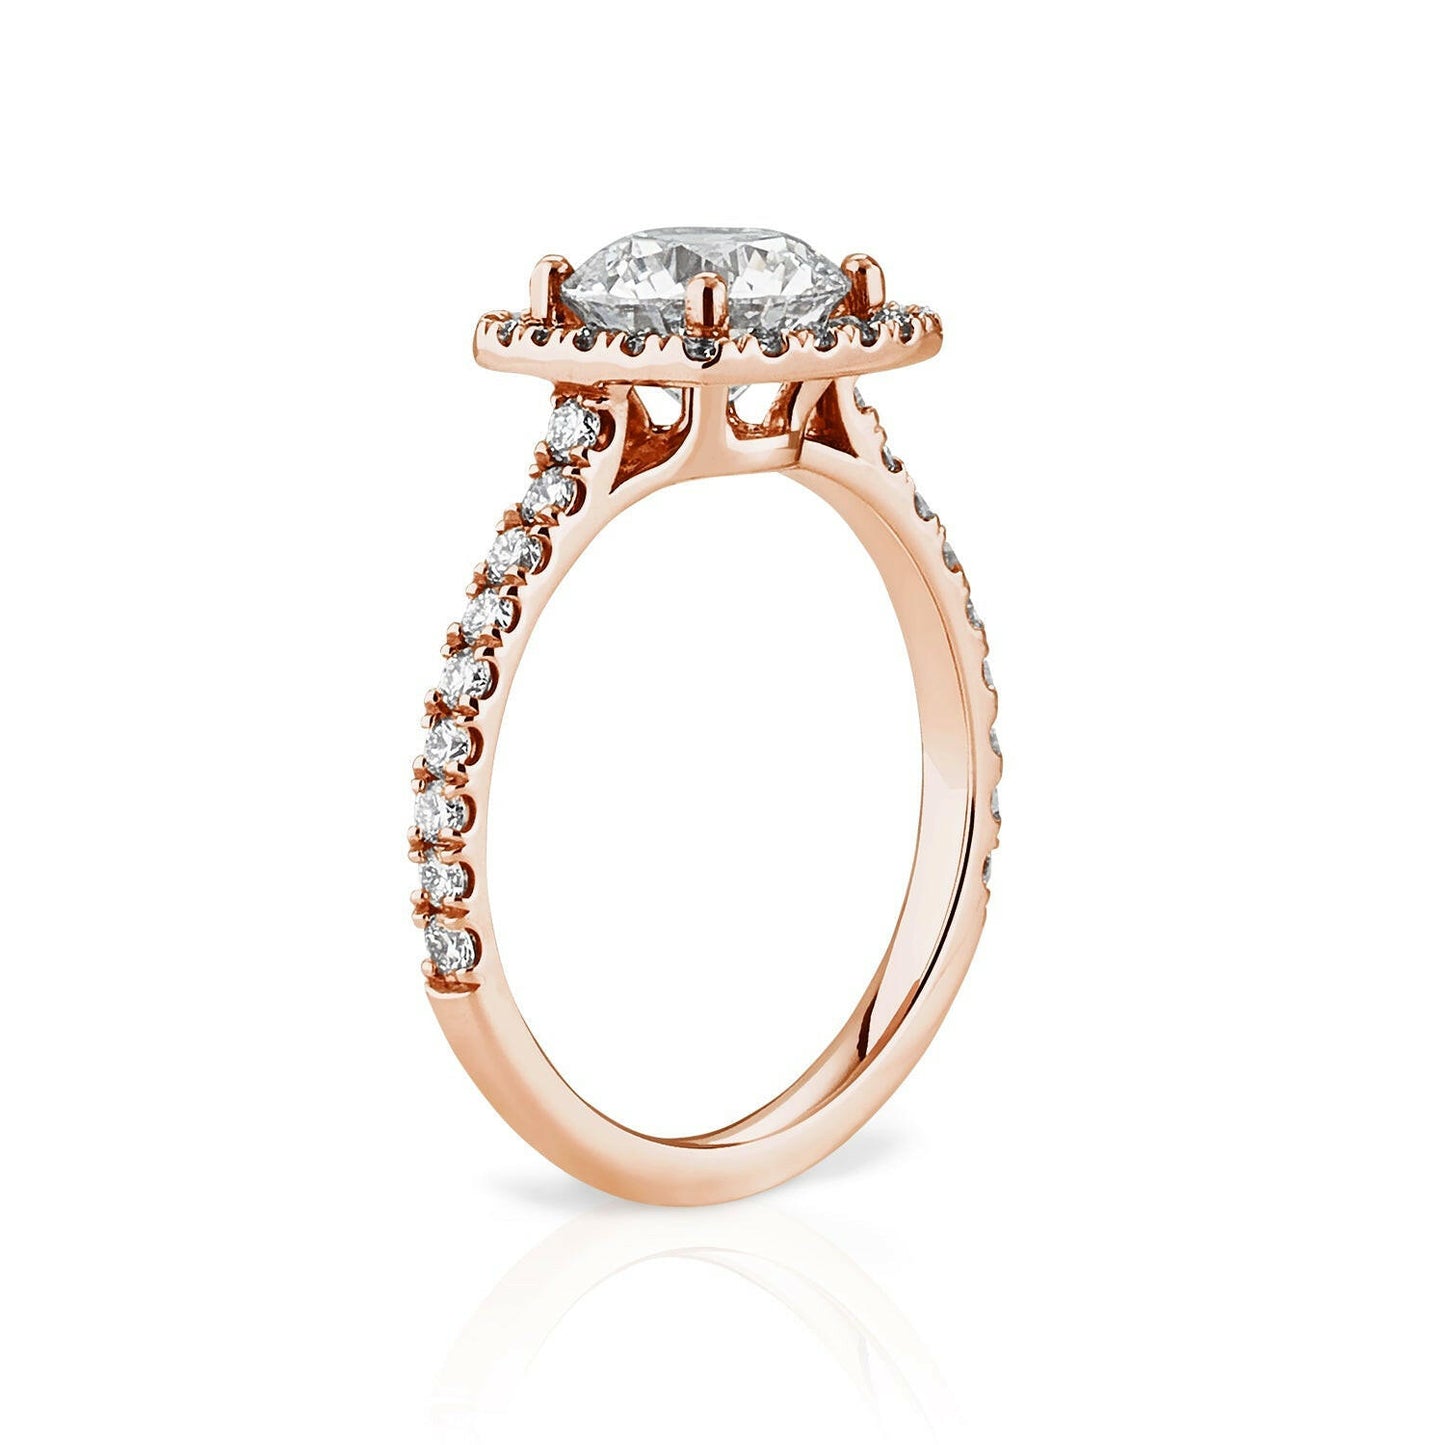 Ring Ruby, Roségold mit Diamant 1.5 ct. von The Good Bling online kaufen (Ref. TGB-Ruby-Ring-RG-15)